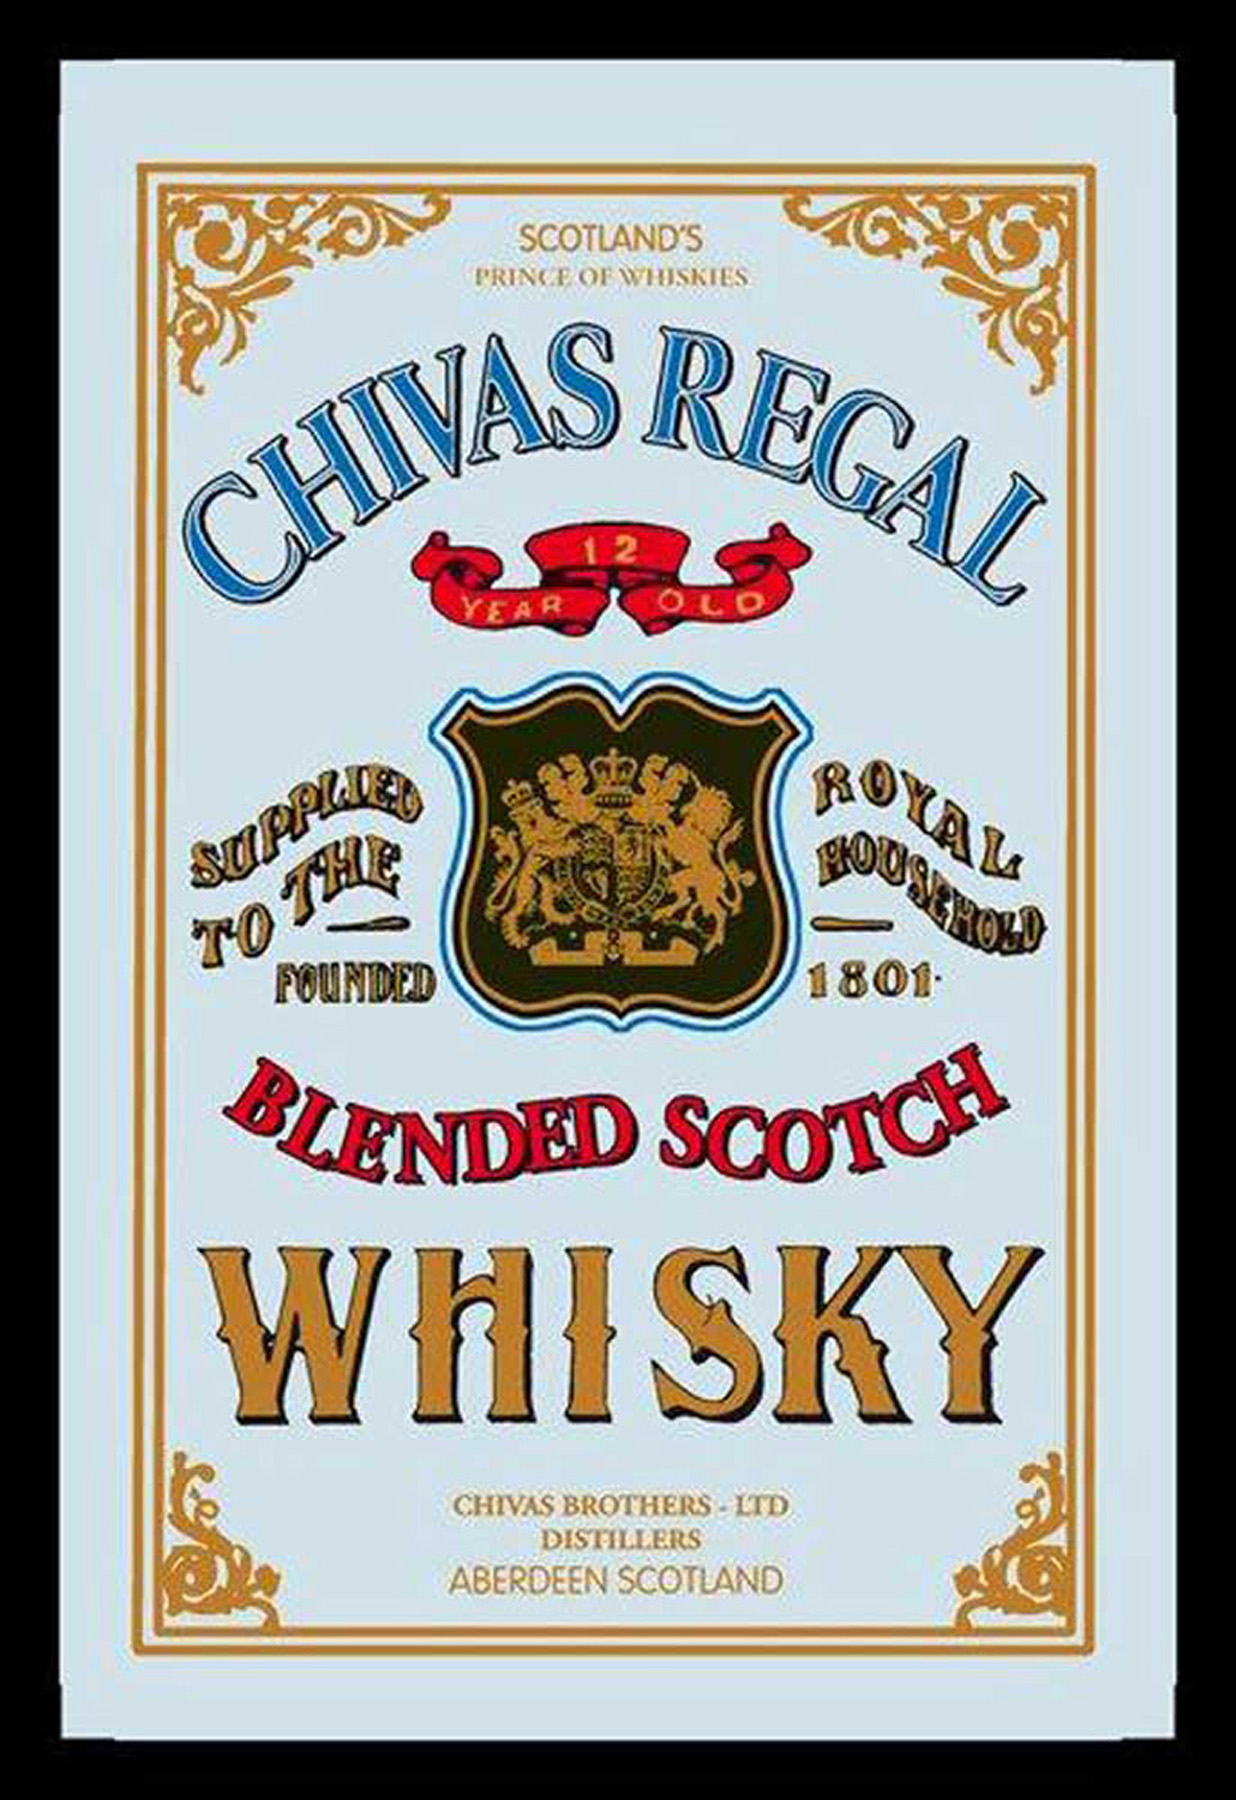 Chivas Regal Whisky 